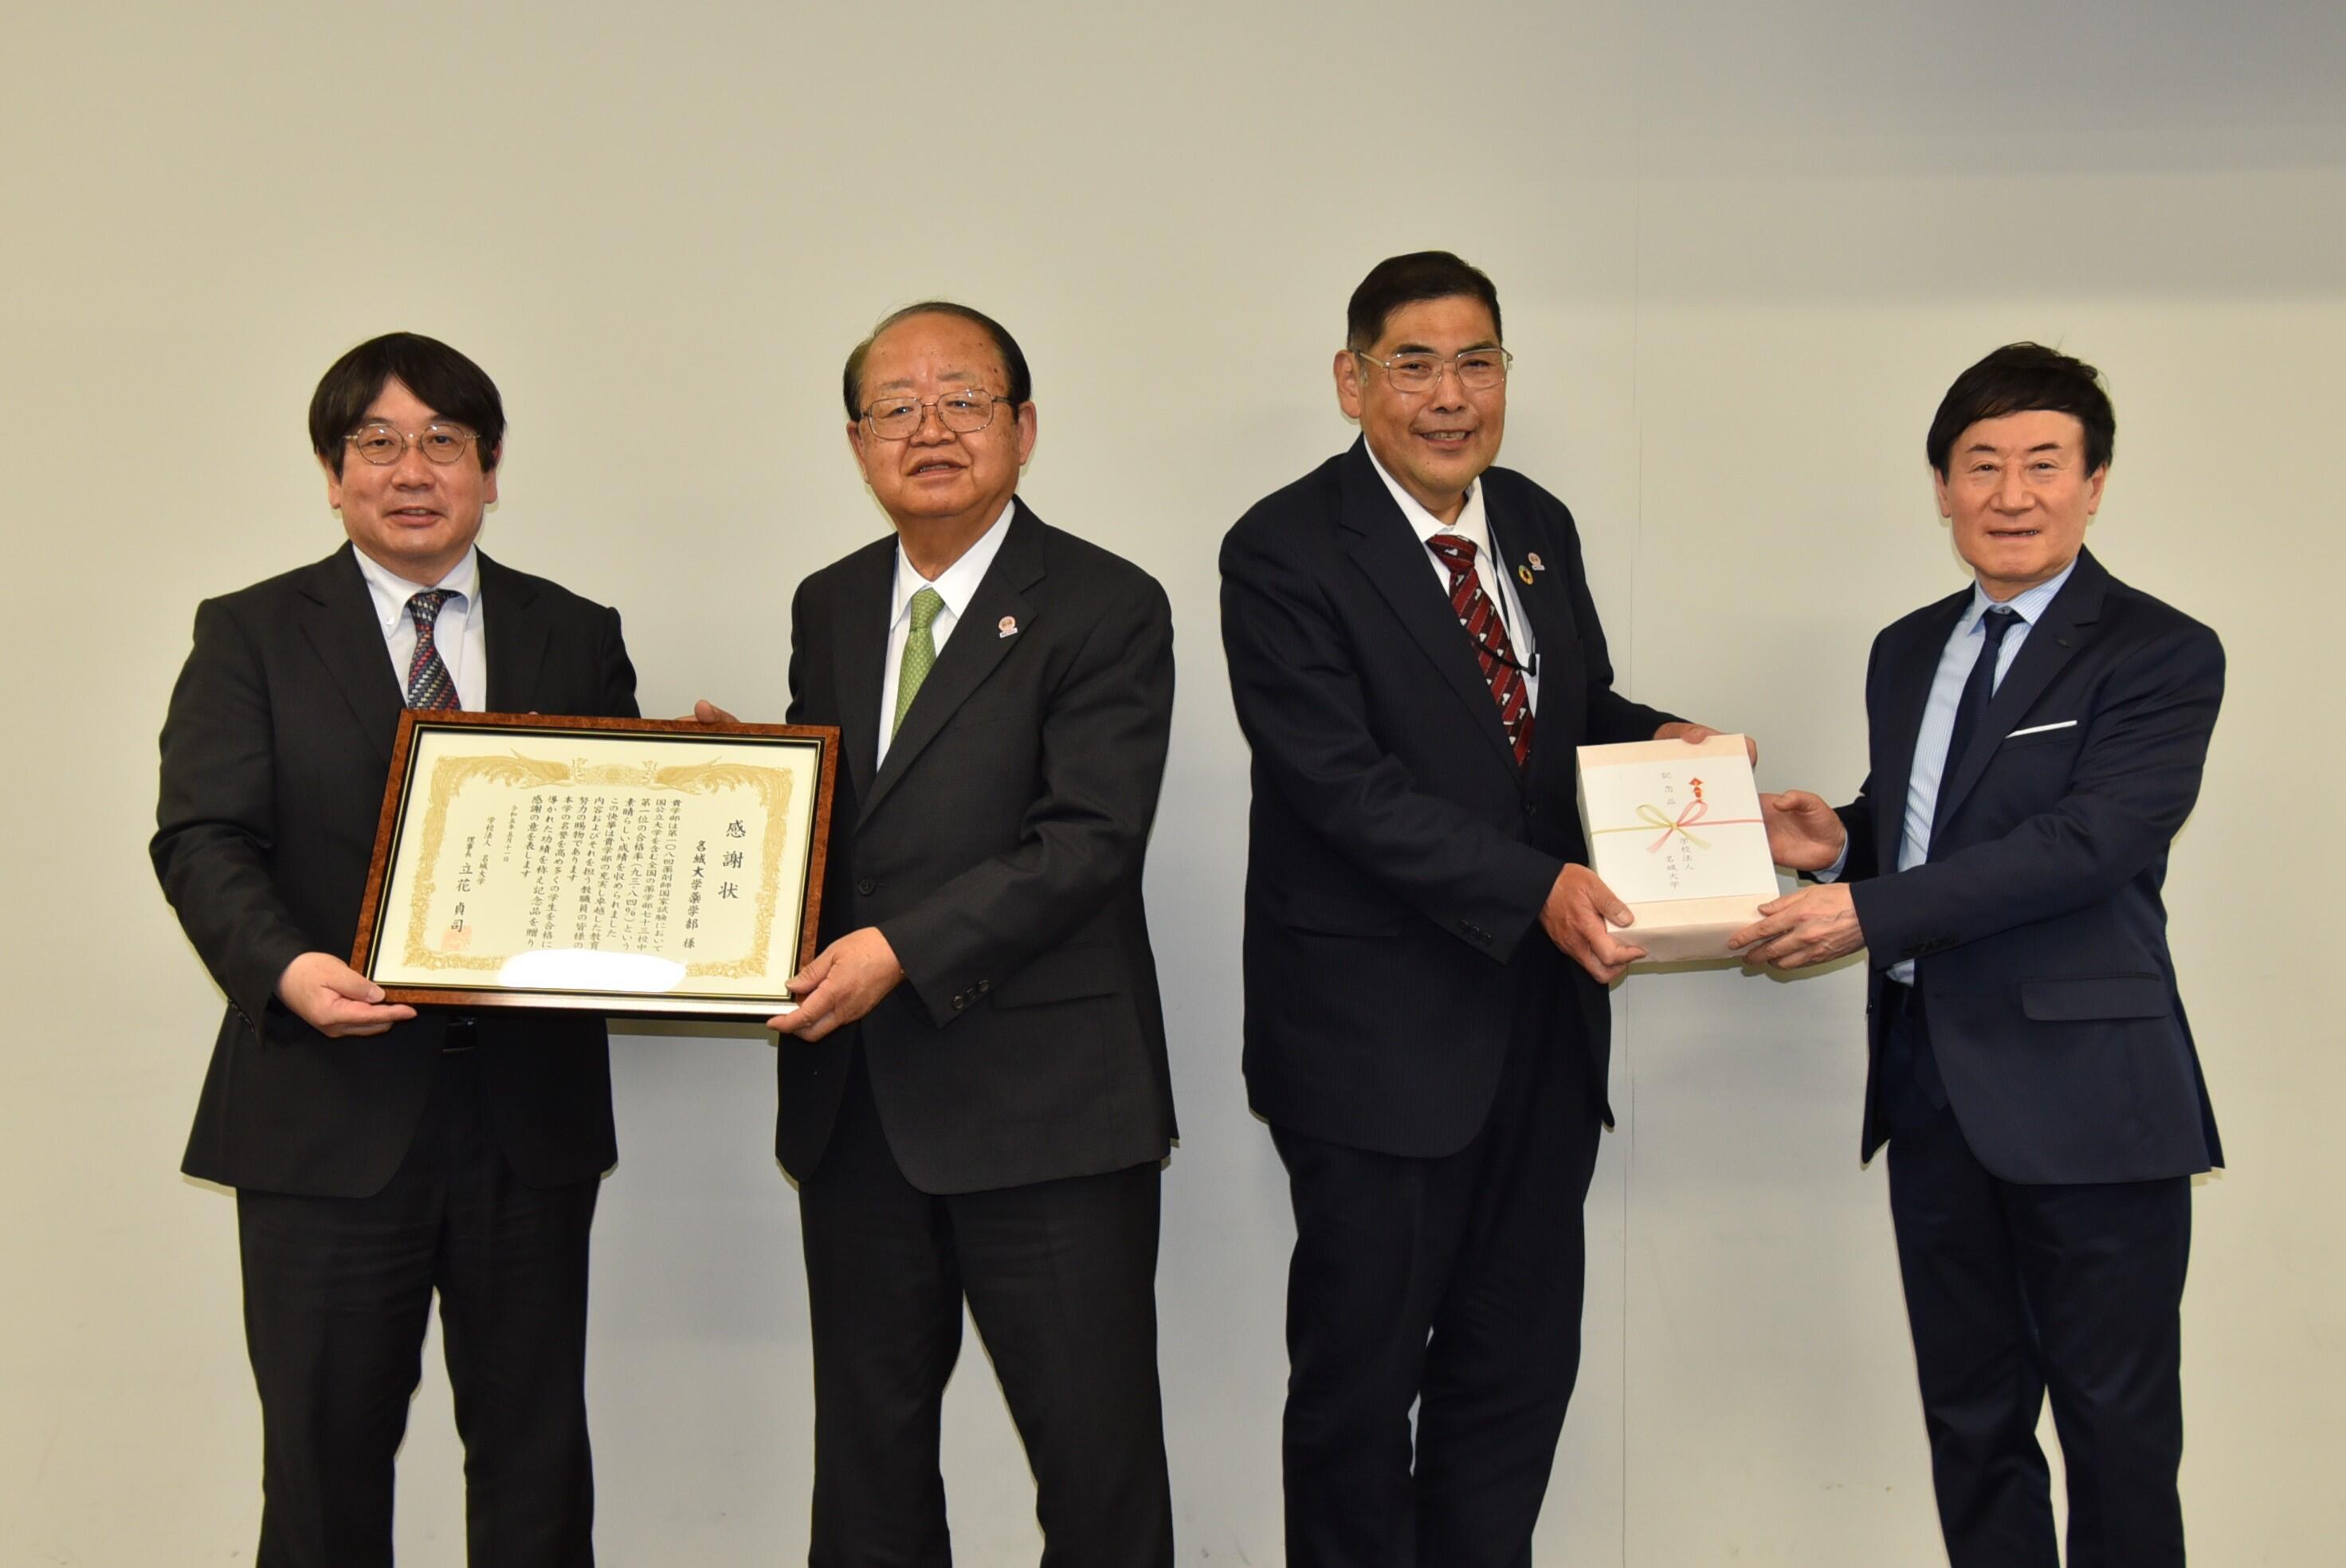 感謝状贈呈式で。（左から）神野学部長、立花理事長、小原学長、飯田教授